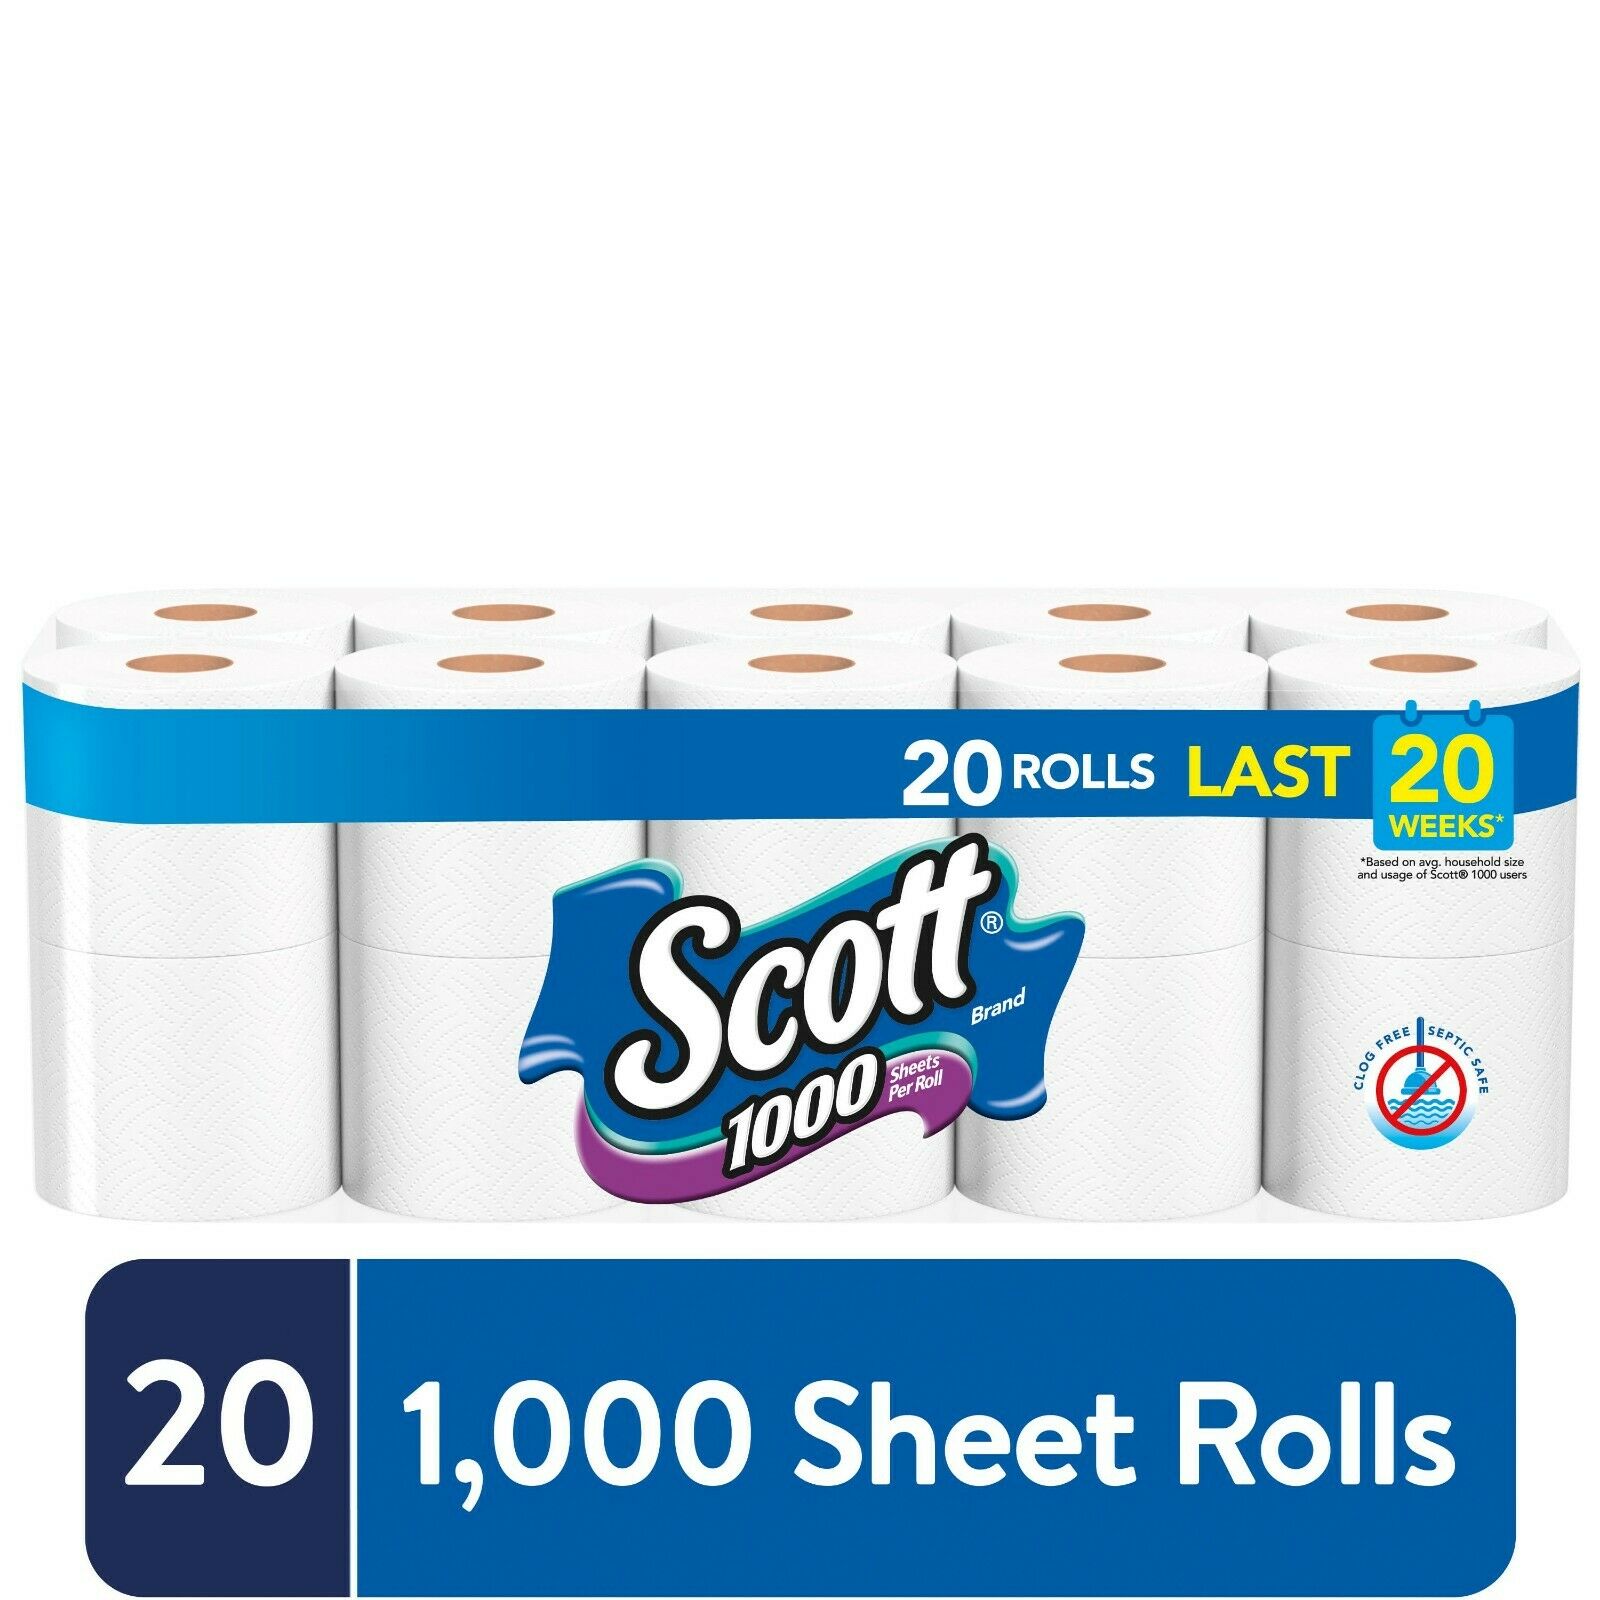 Scott Bath Tissue 20 Rolls, 1000 Sheets Per Roll Toilet Paper, Free Shipping